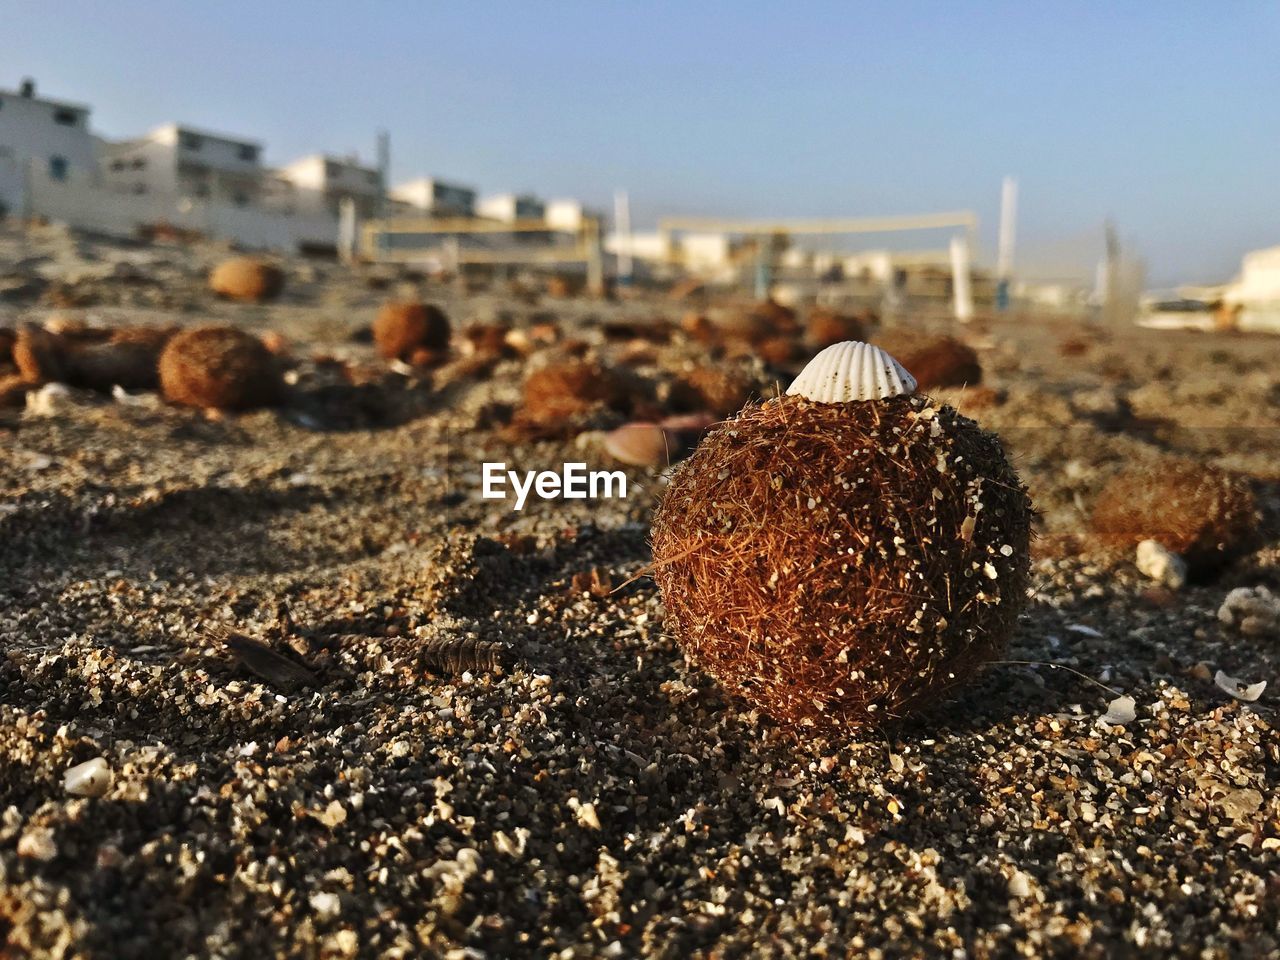 Close-up of plant and seashell at beach